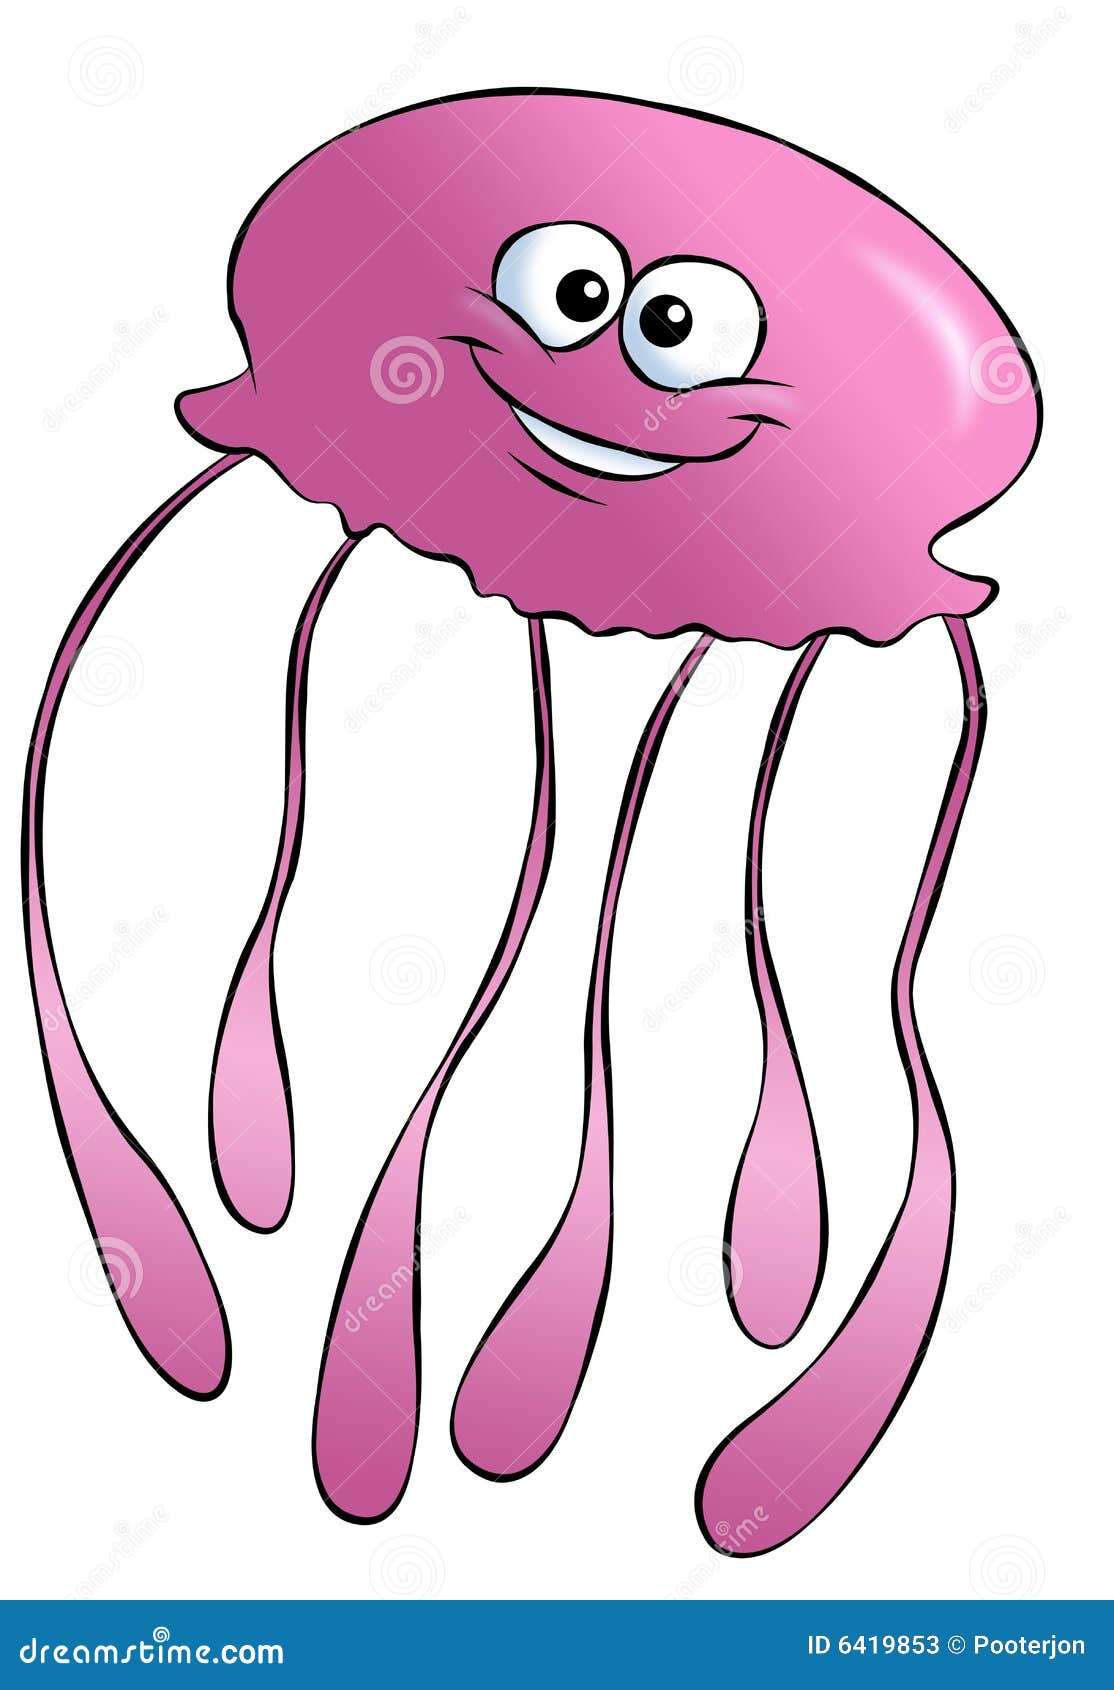 animated jellyfish clipart - photo #50